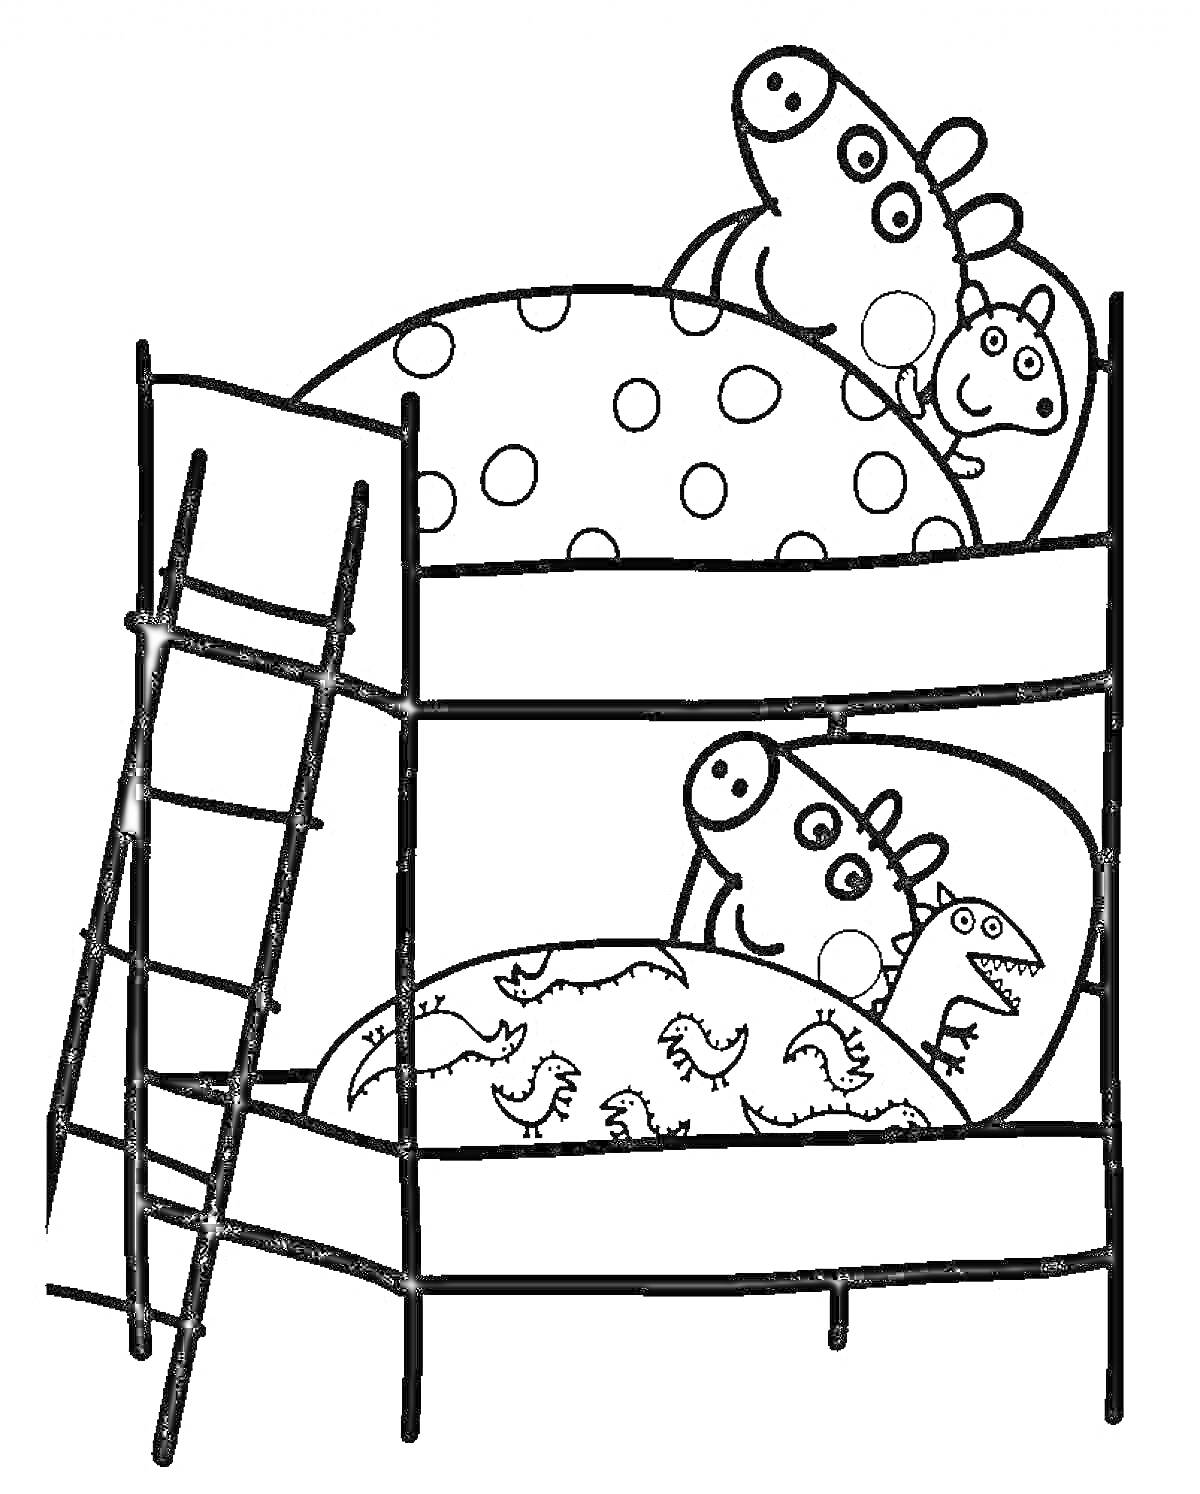 Свинка Пеппа и Джордж спят в двухъярусной кровати